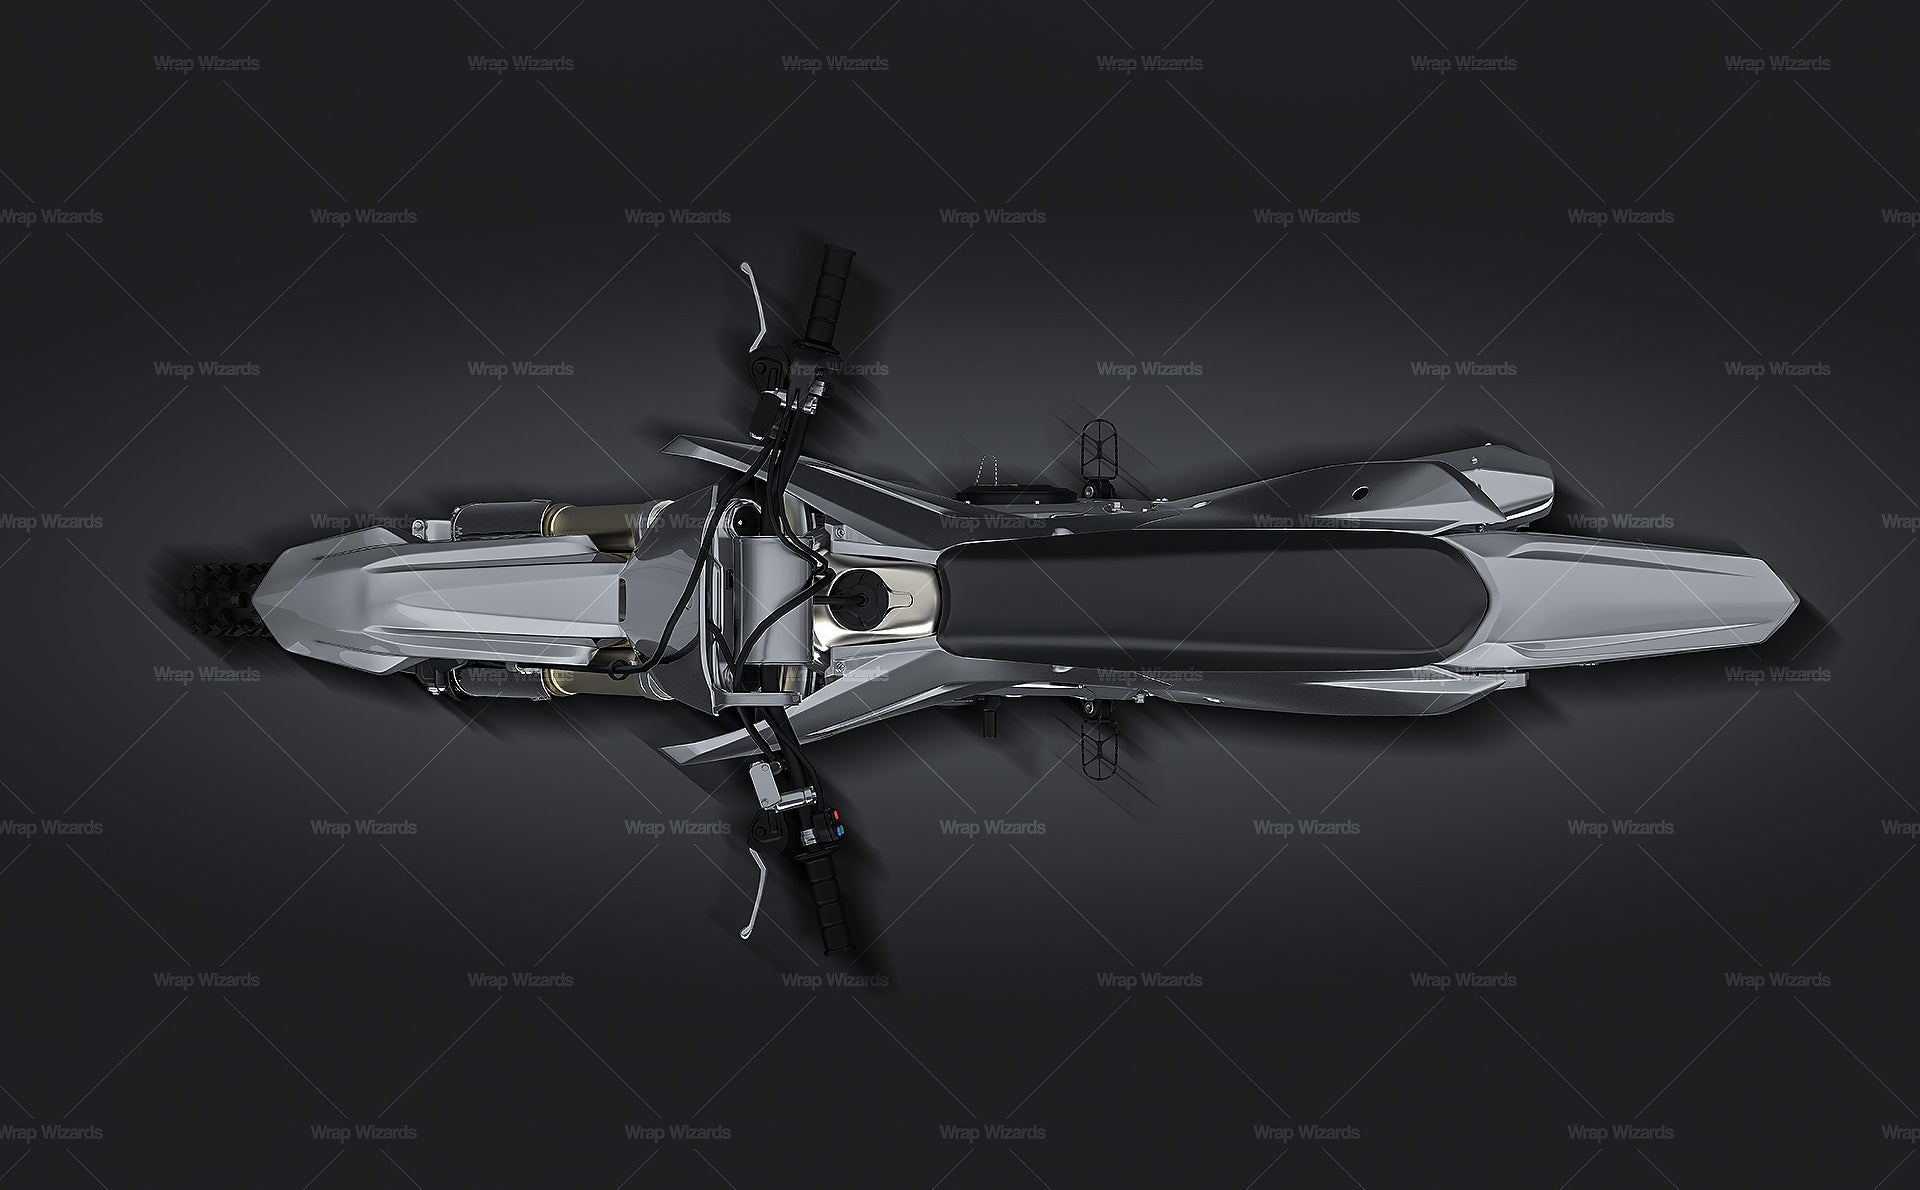 Honda CRF450R 2021 Motocross Bike glossy finish - all sides Car Mockup Template.psd